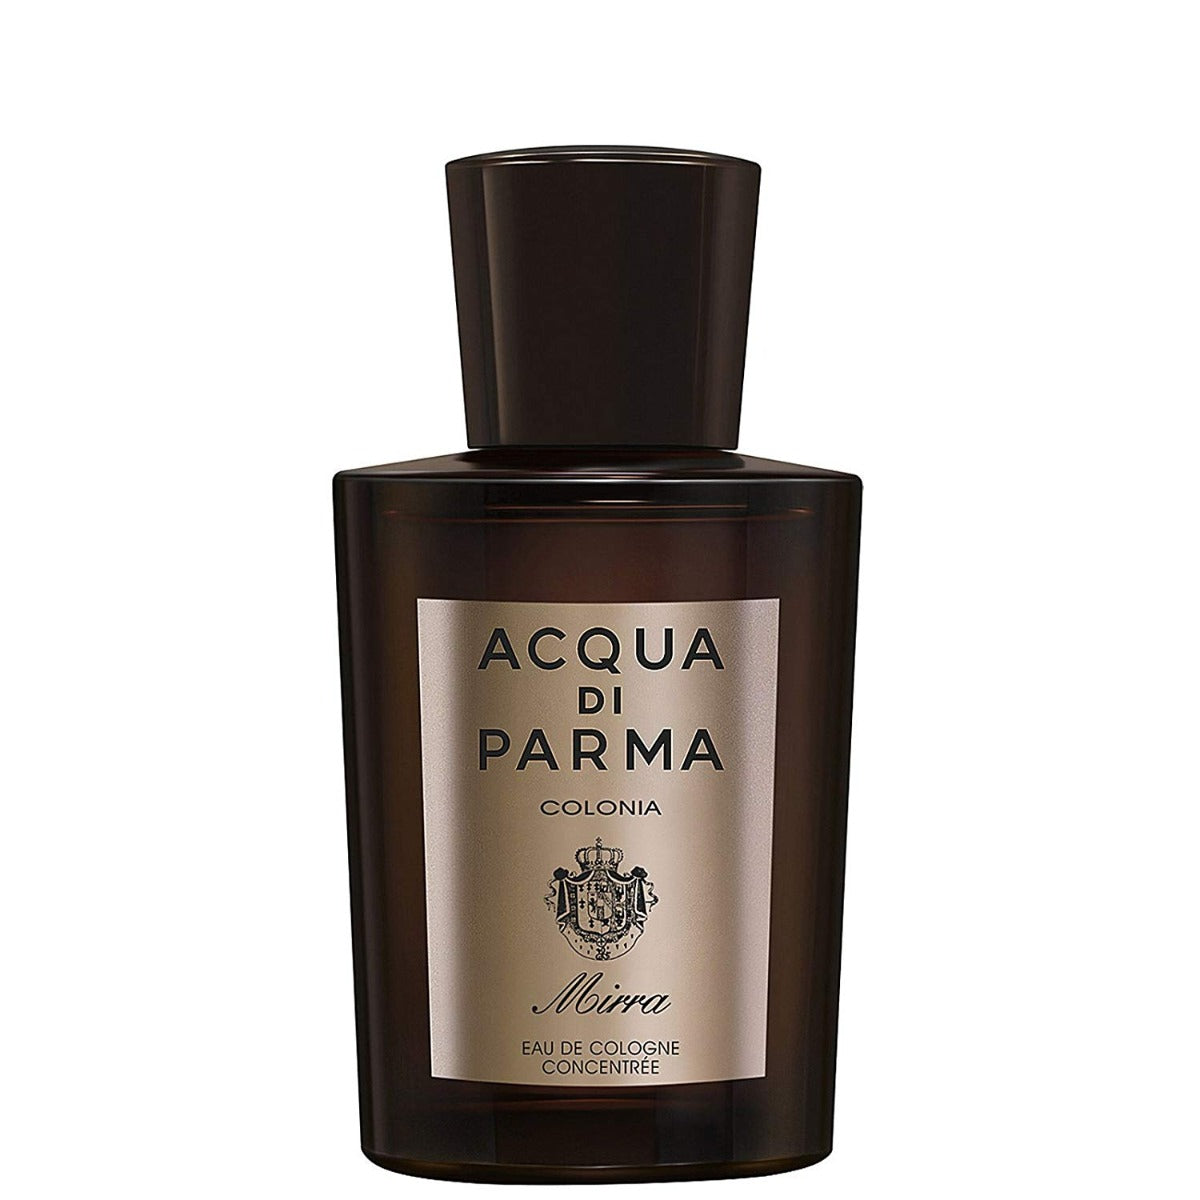 Acqua Di Parma Colonia Mirra Perfume For Men - EDC, 100ml - samawa perfumes 